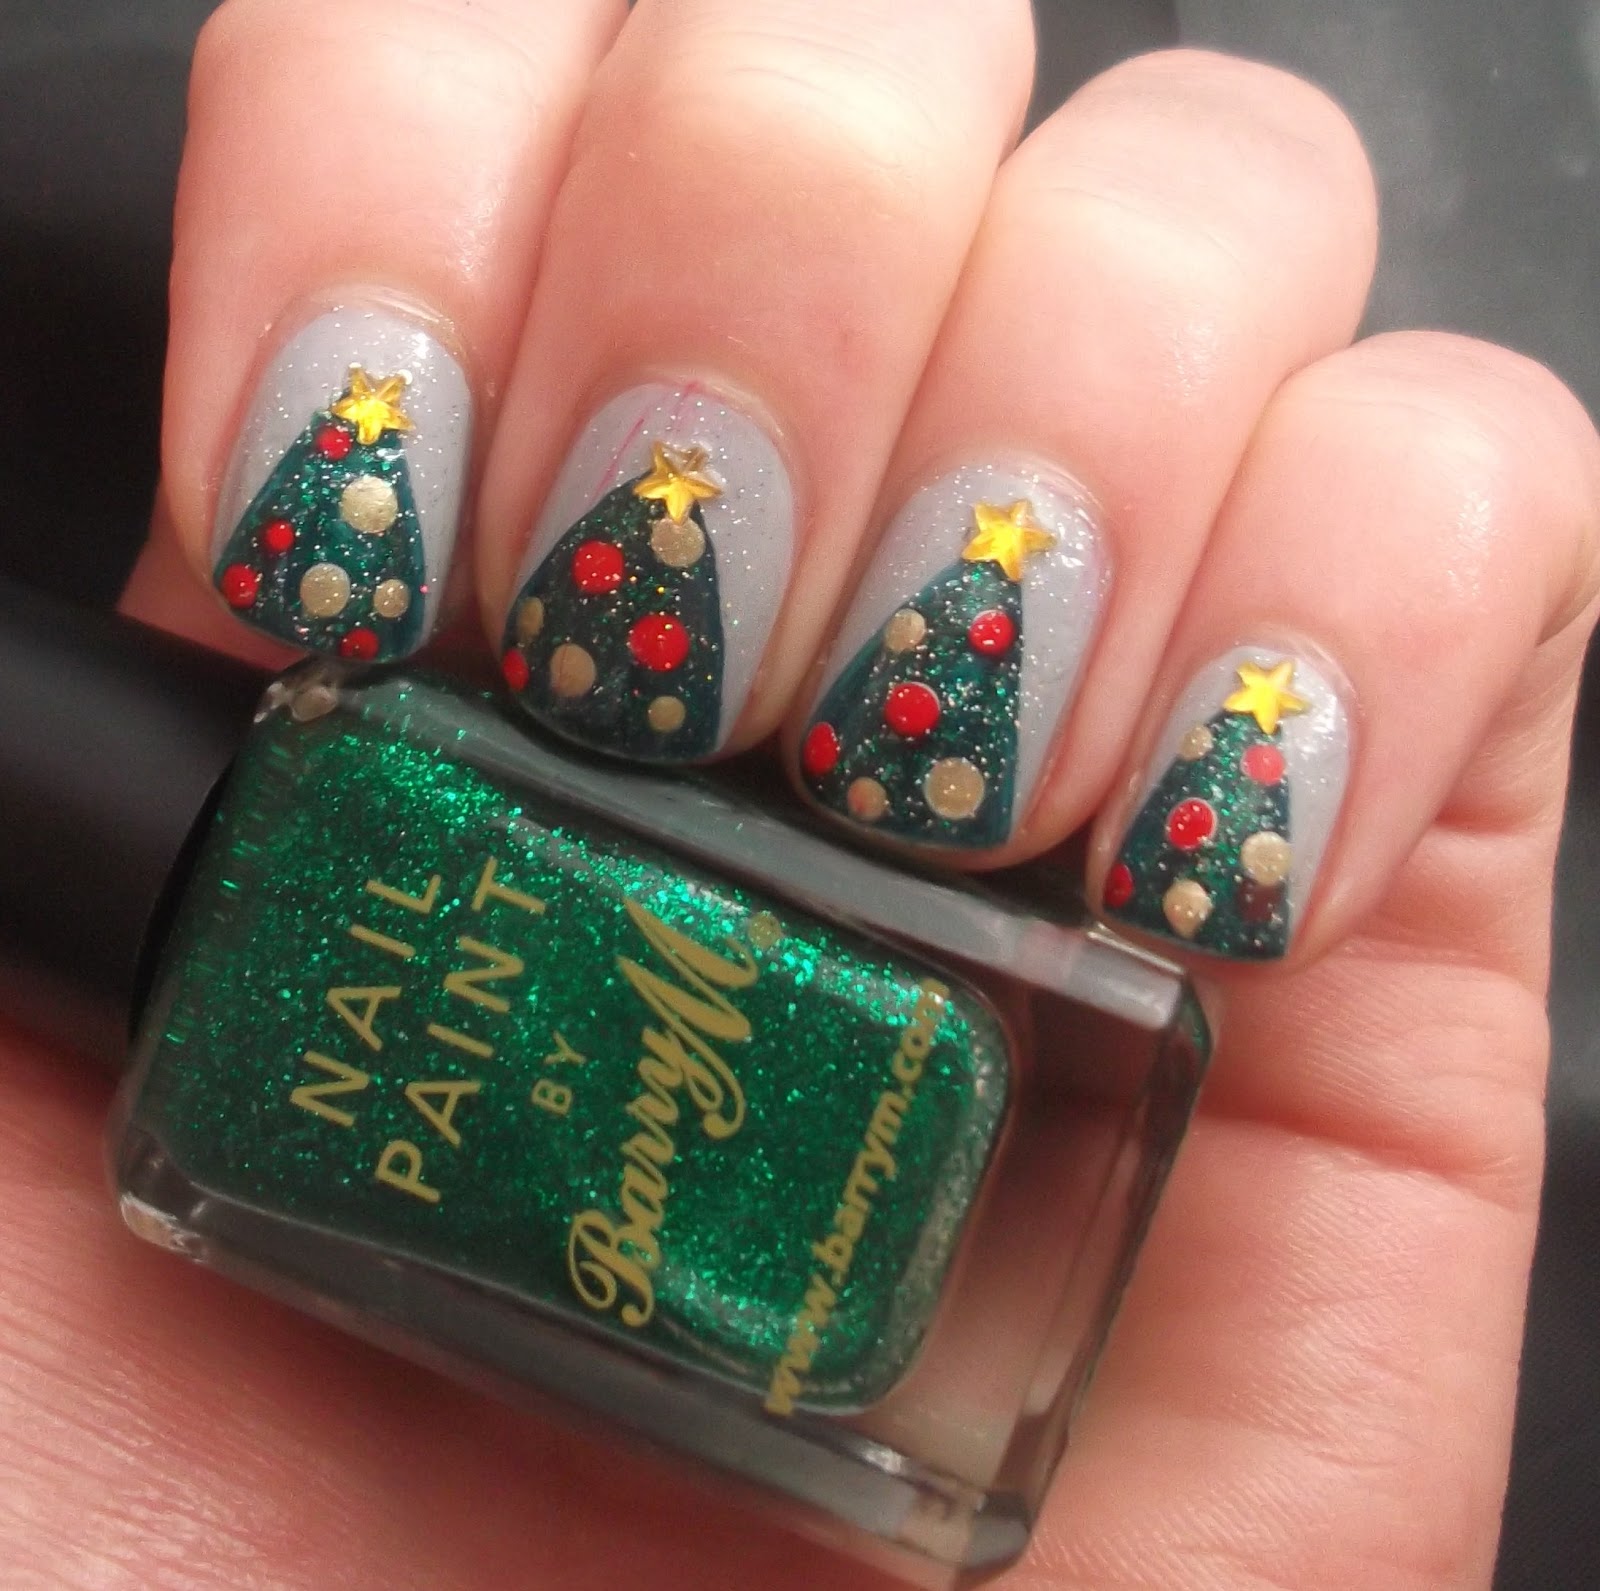 Lou is Perfectly Polished: Christmas Nails: Christmas Trees